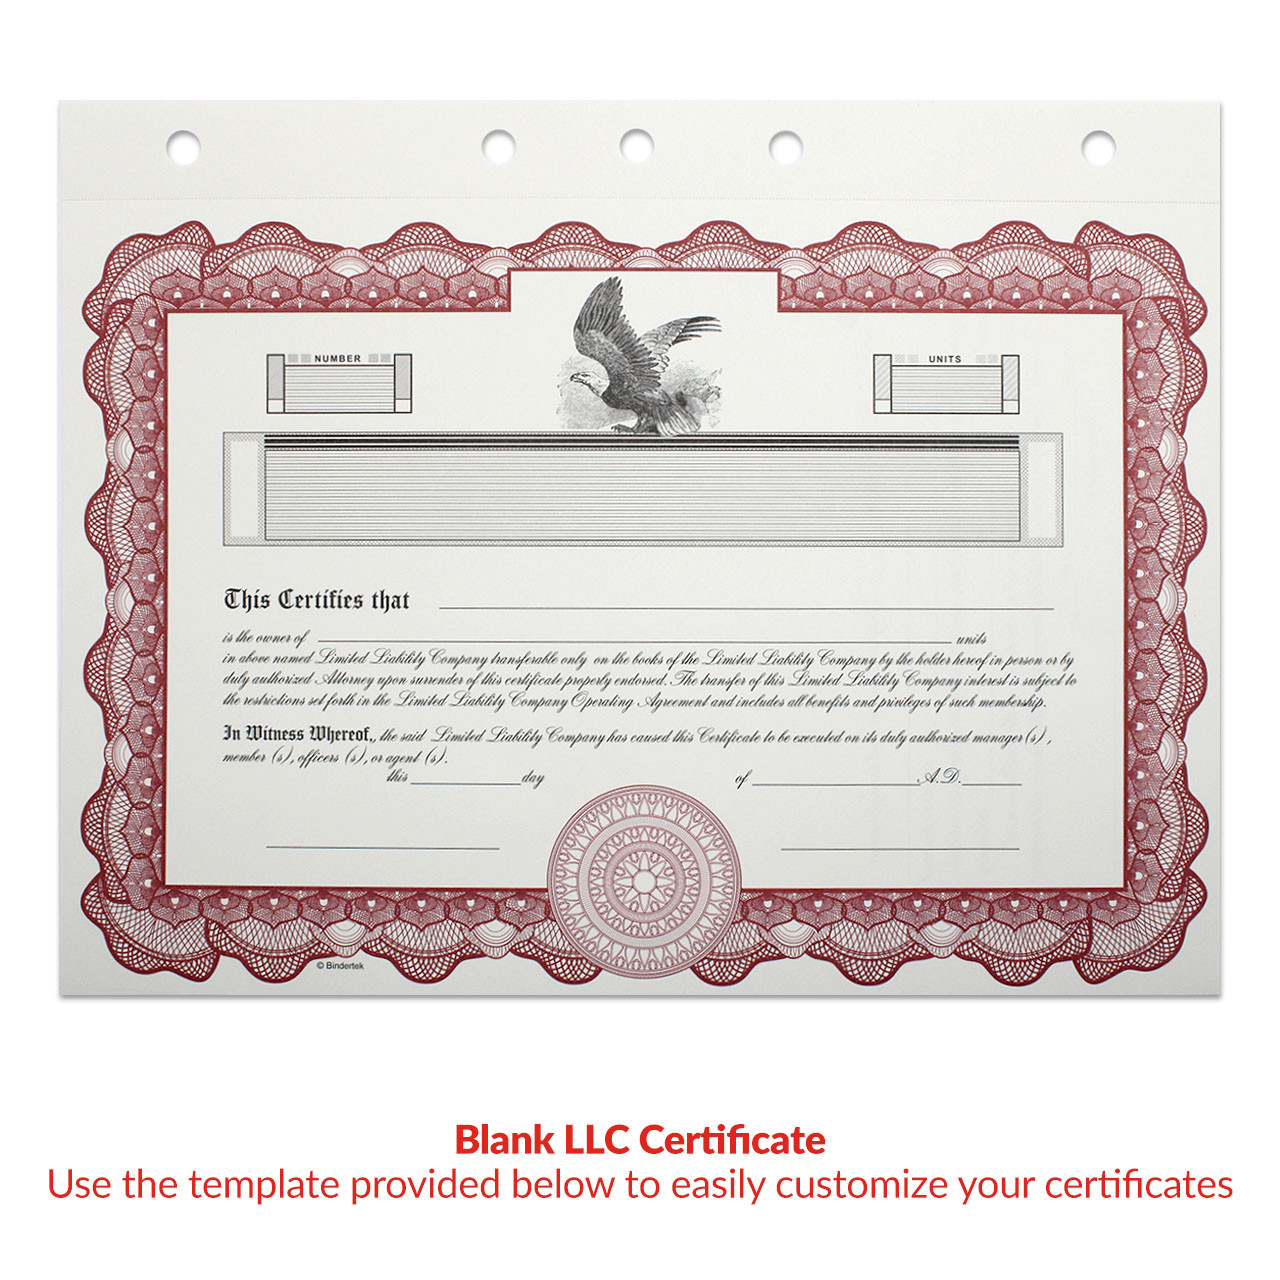 rotary club certificate template